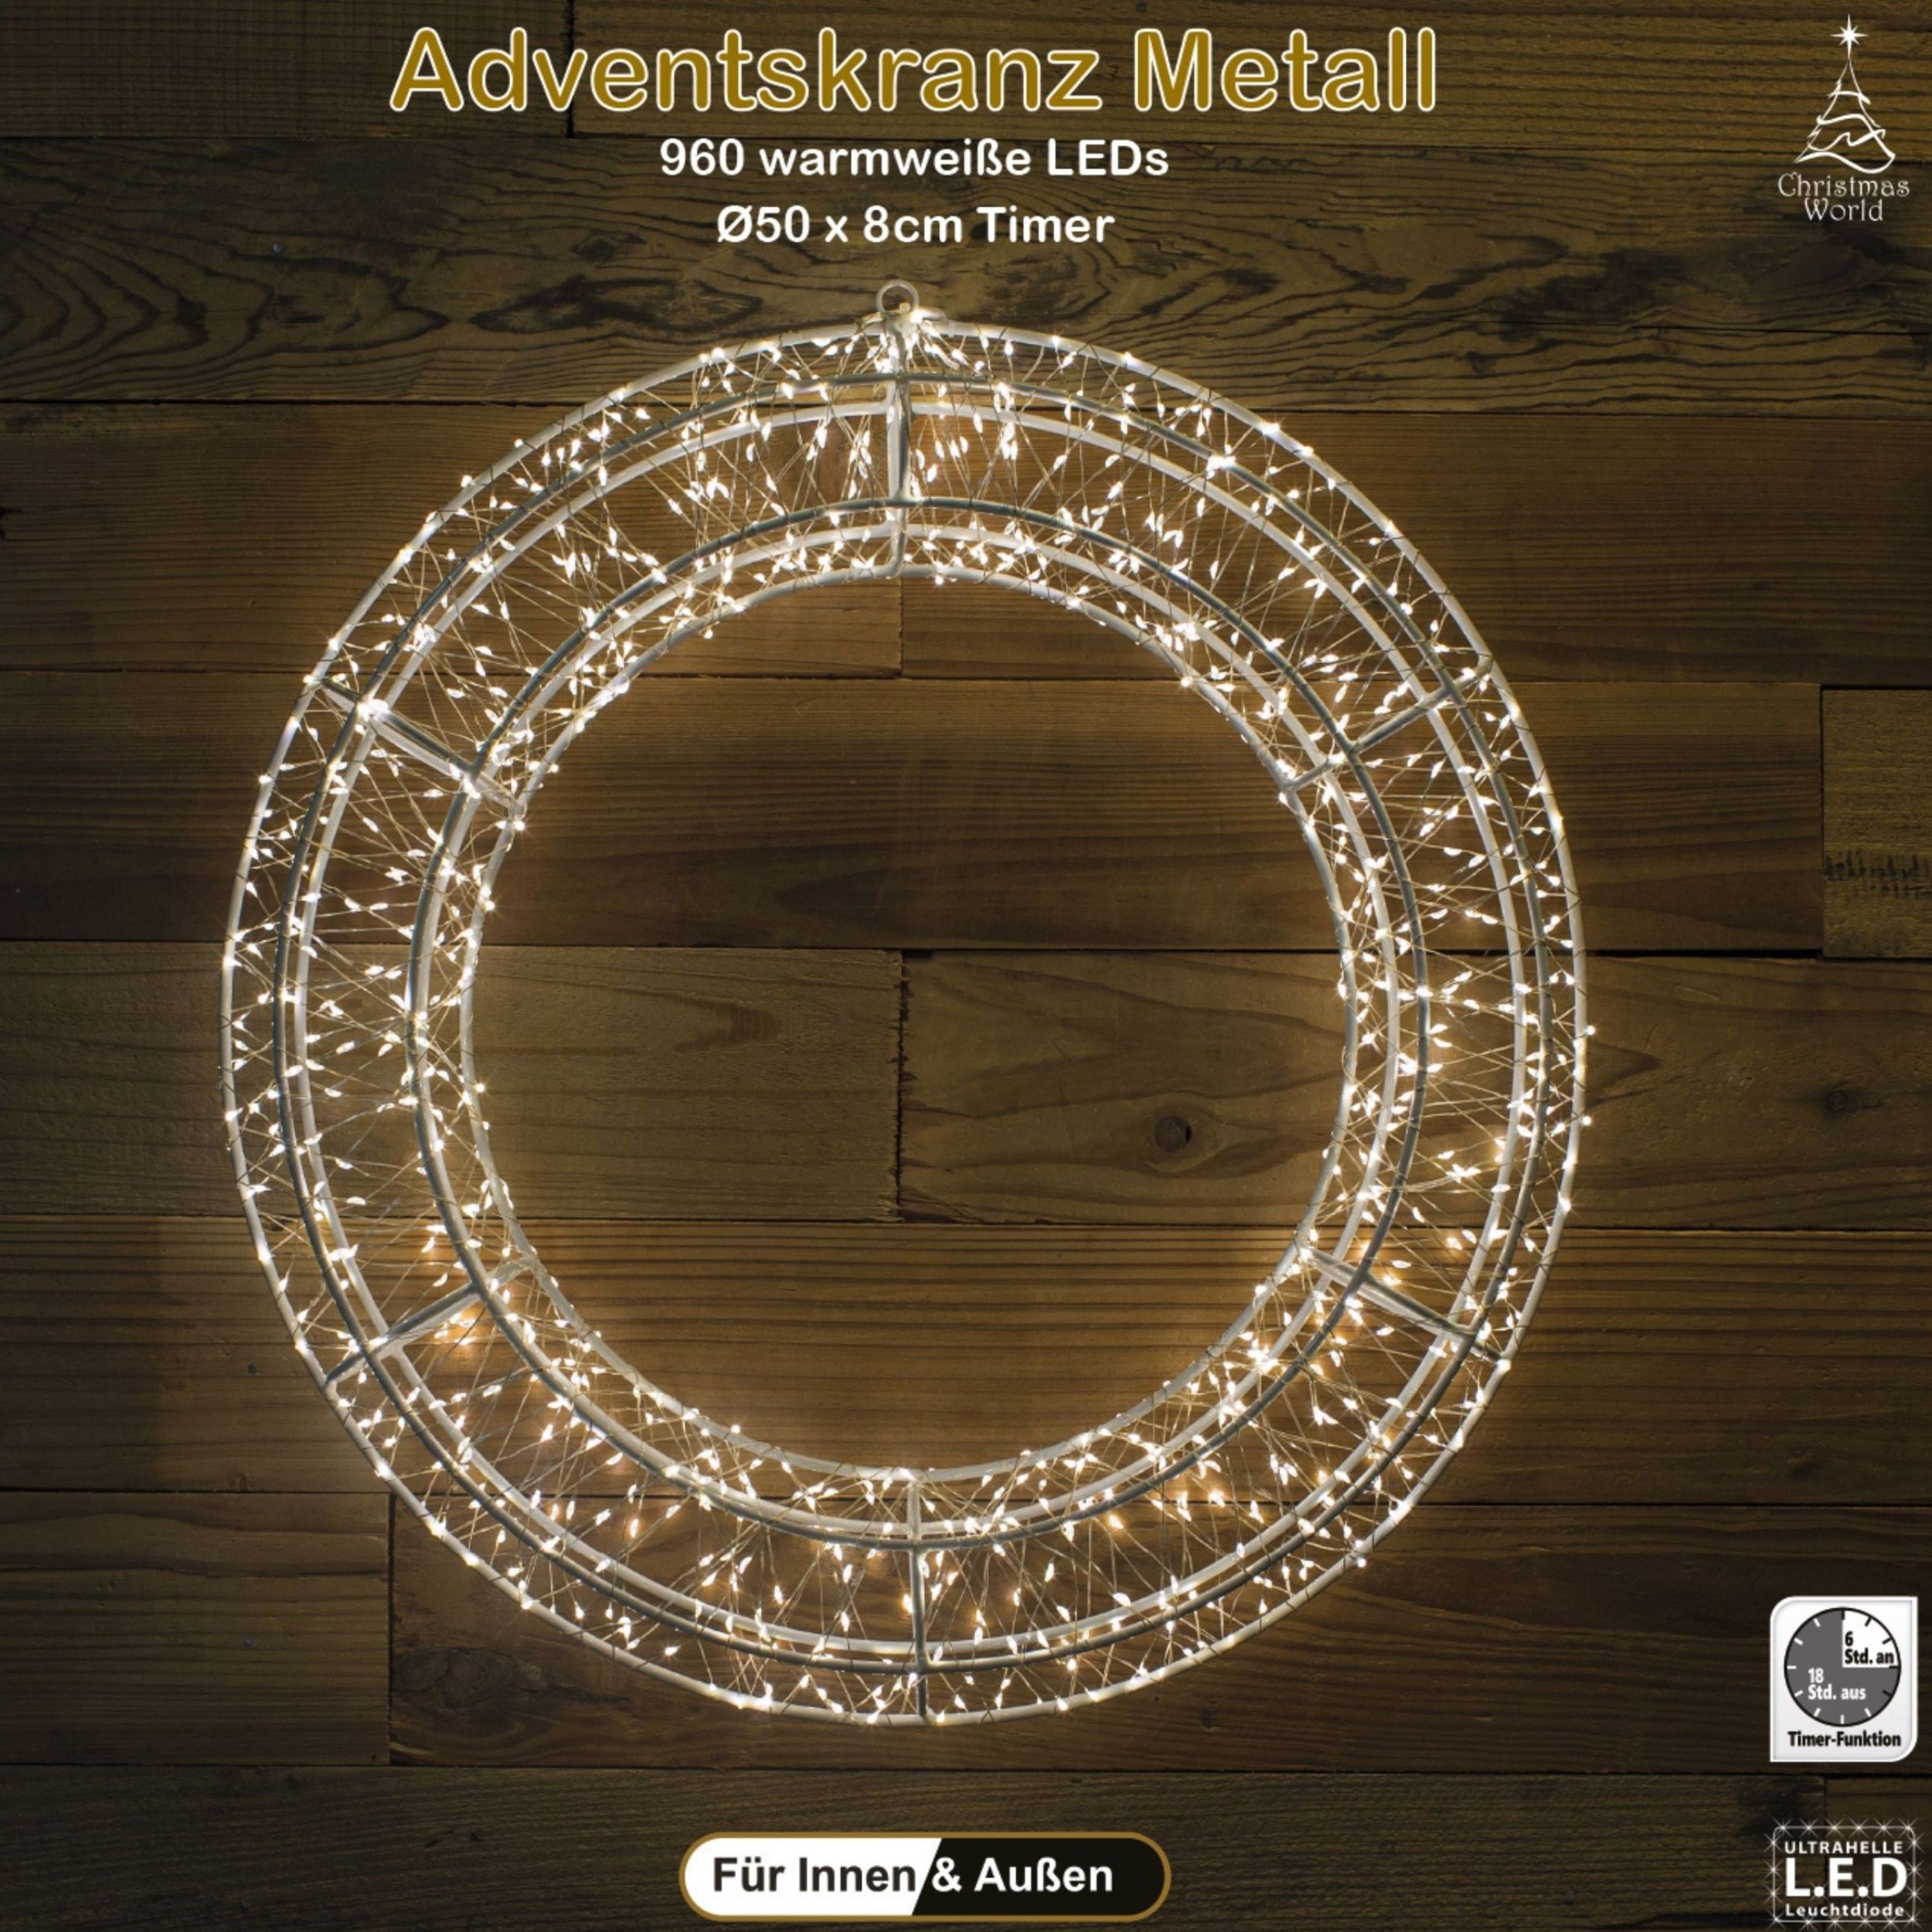 LED Adventskranz Metall 50x8 cm mit Timer